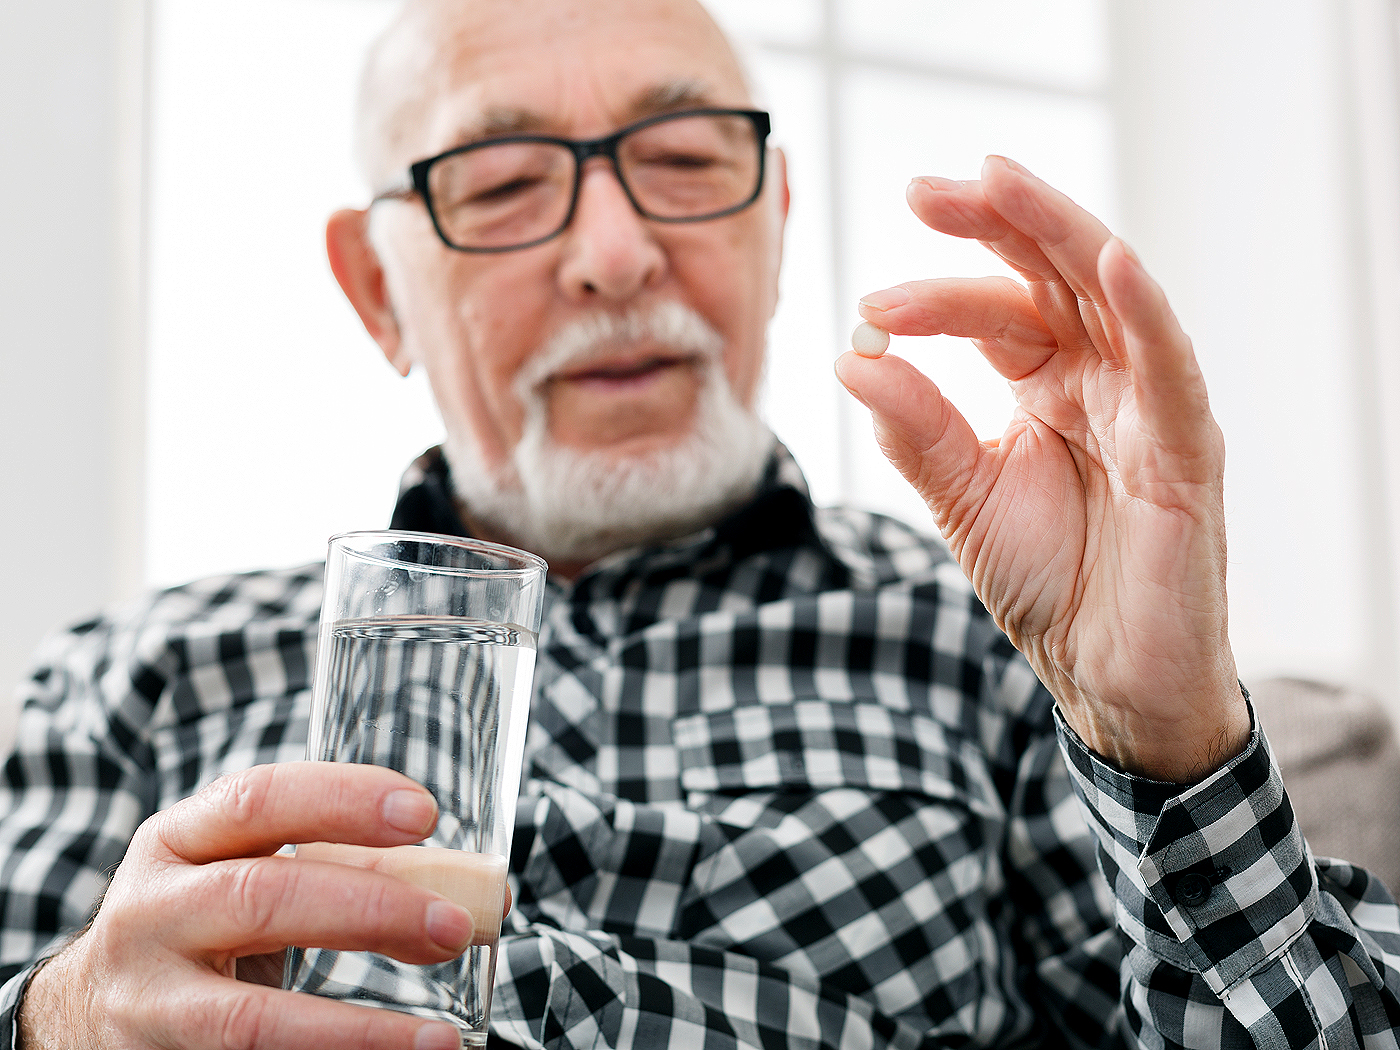 OTC Meds for Older Adults: How to Stay Safe